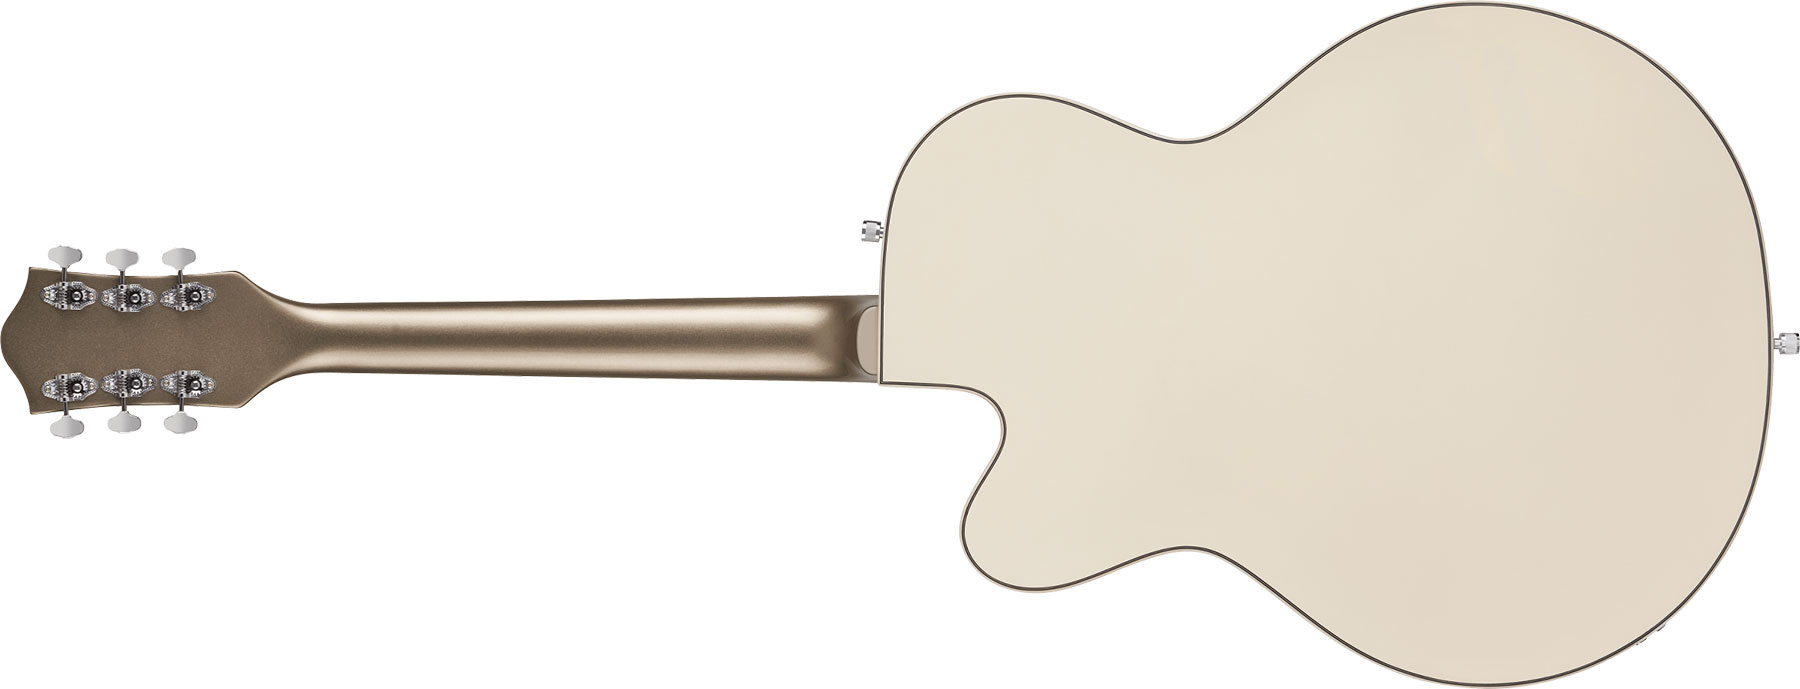 Gretsch G5410t Tri-five Electromatic Hollow Hh Bigsby Rw - Two-tone Vintage White/casino Gold - Semi hollow elektriche gitaar - Variation 1